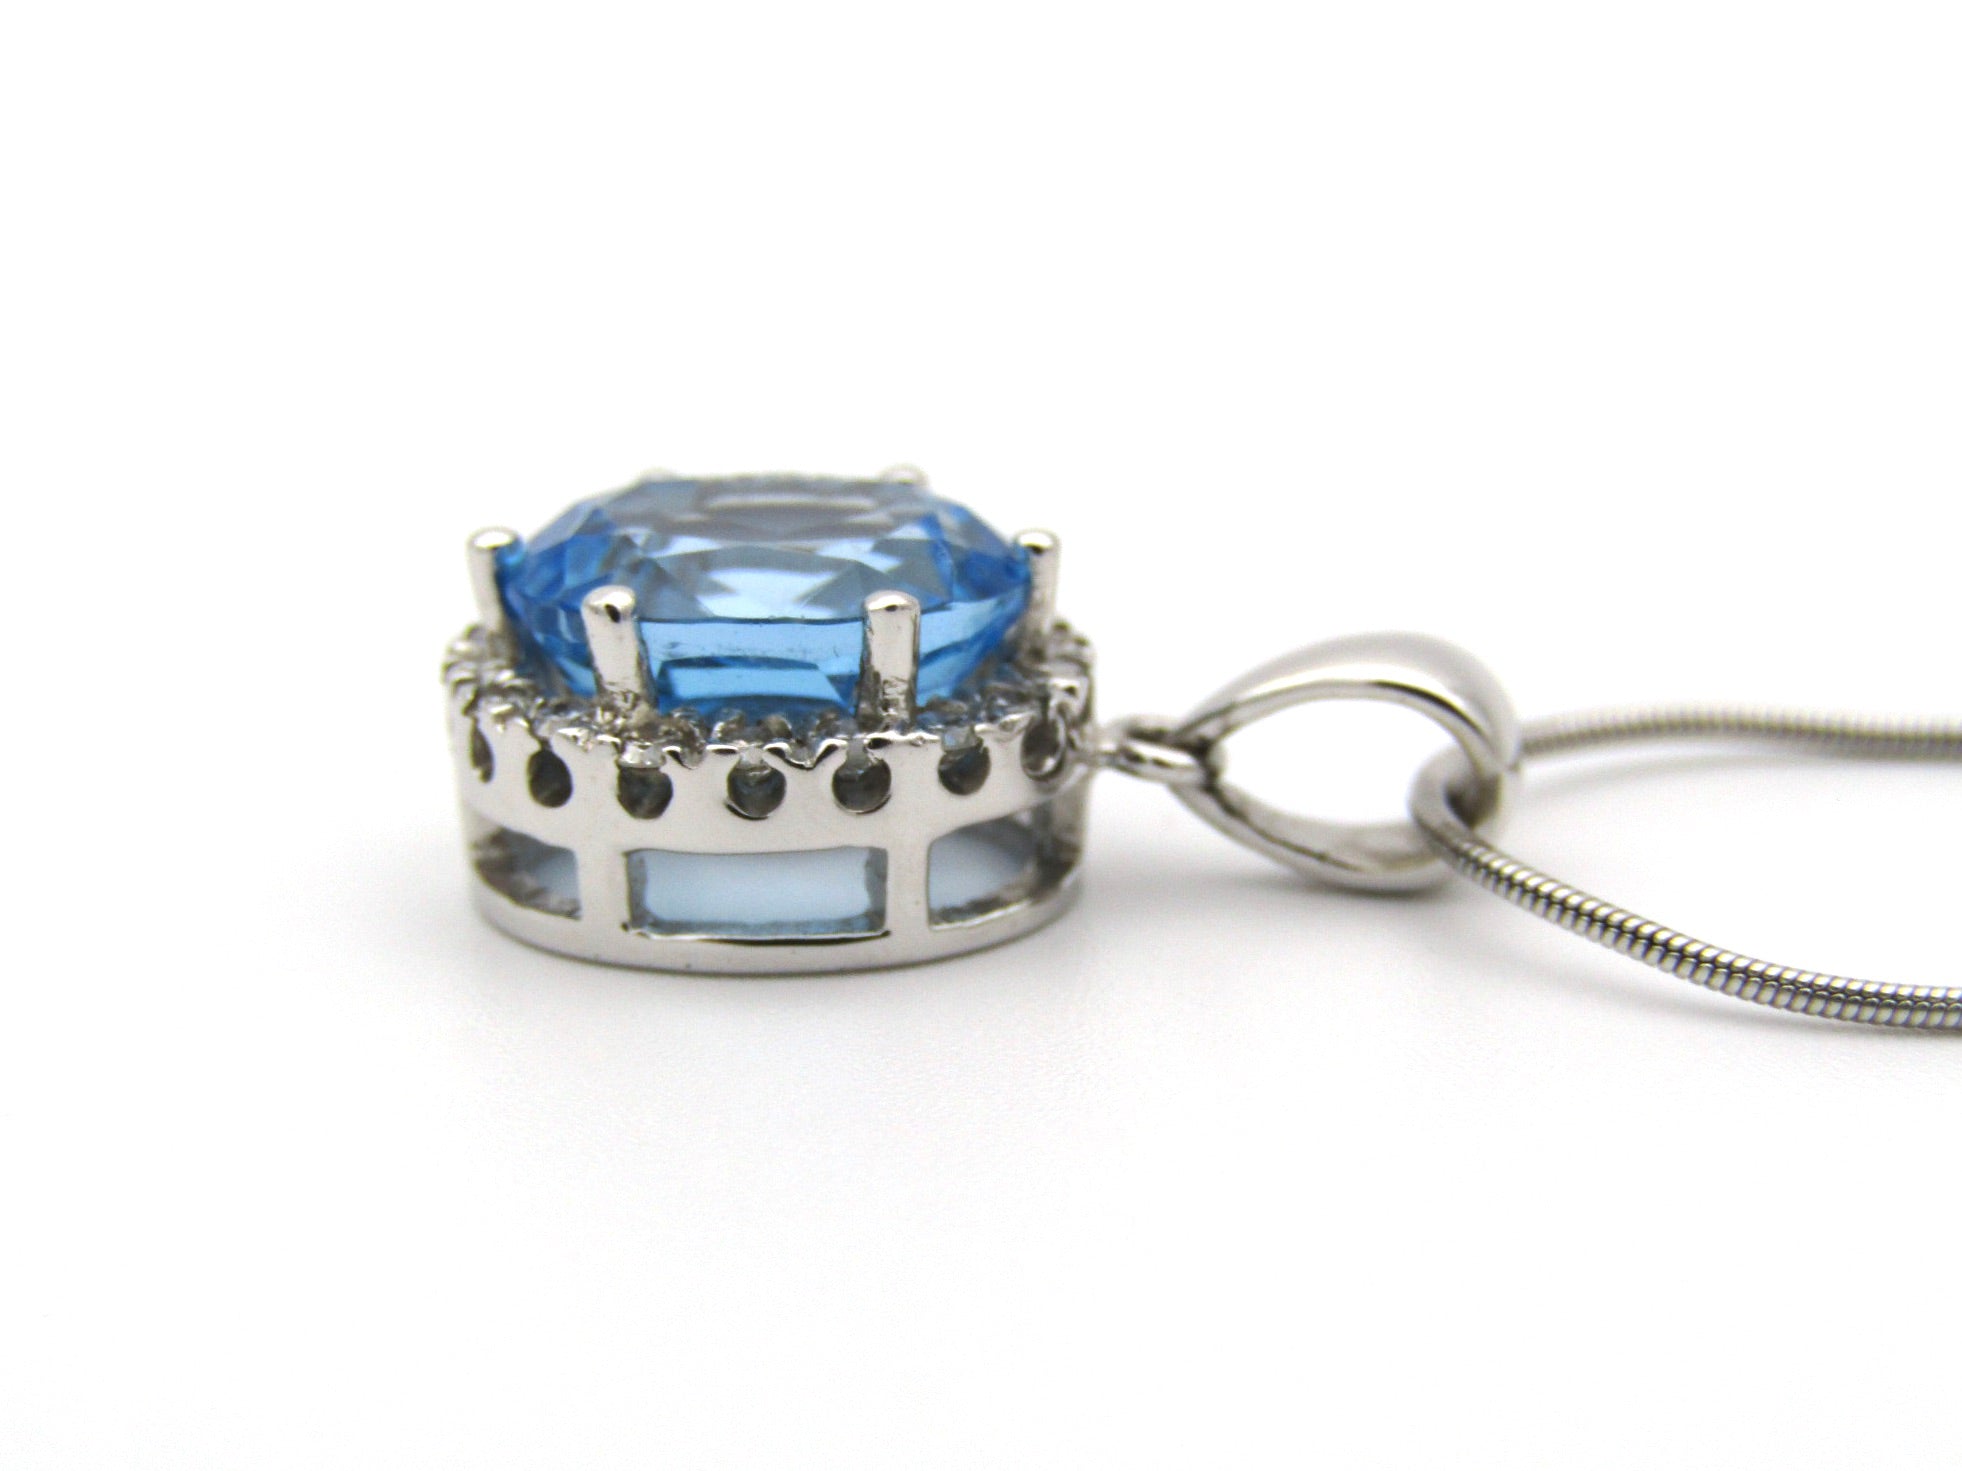 9K gold blue topaz and diamond pendant.